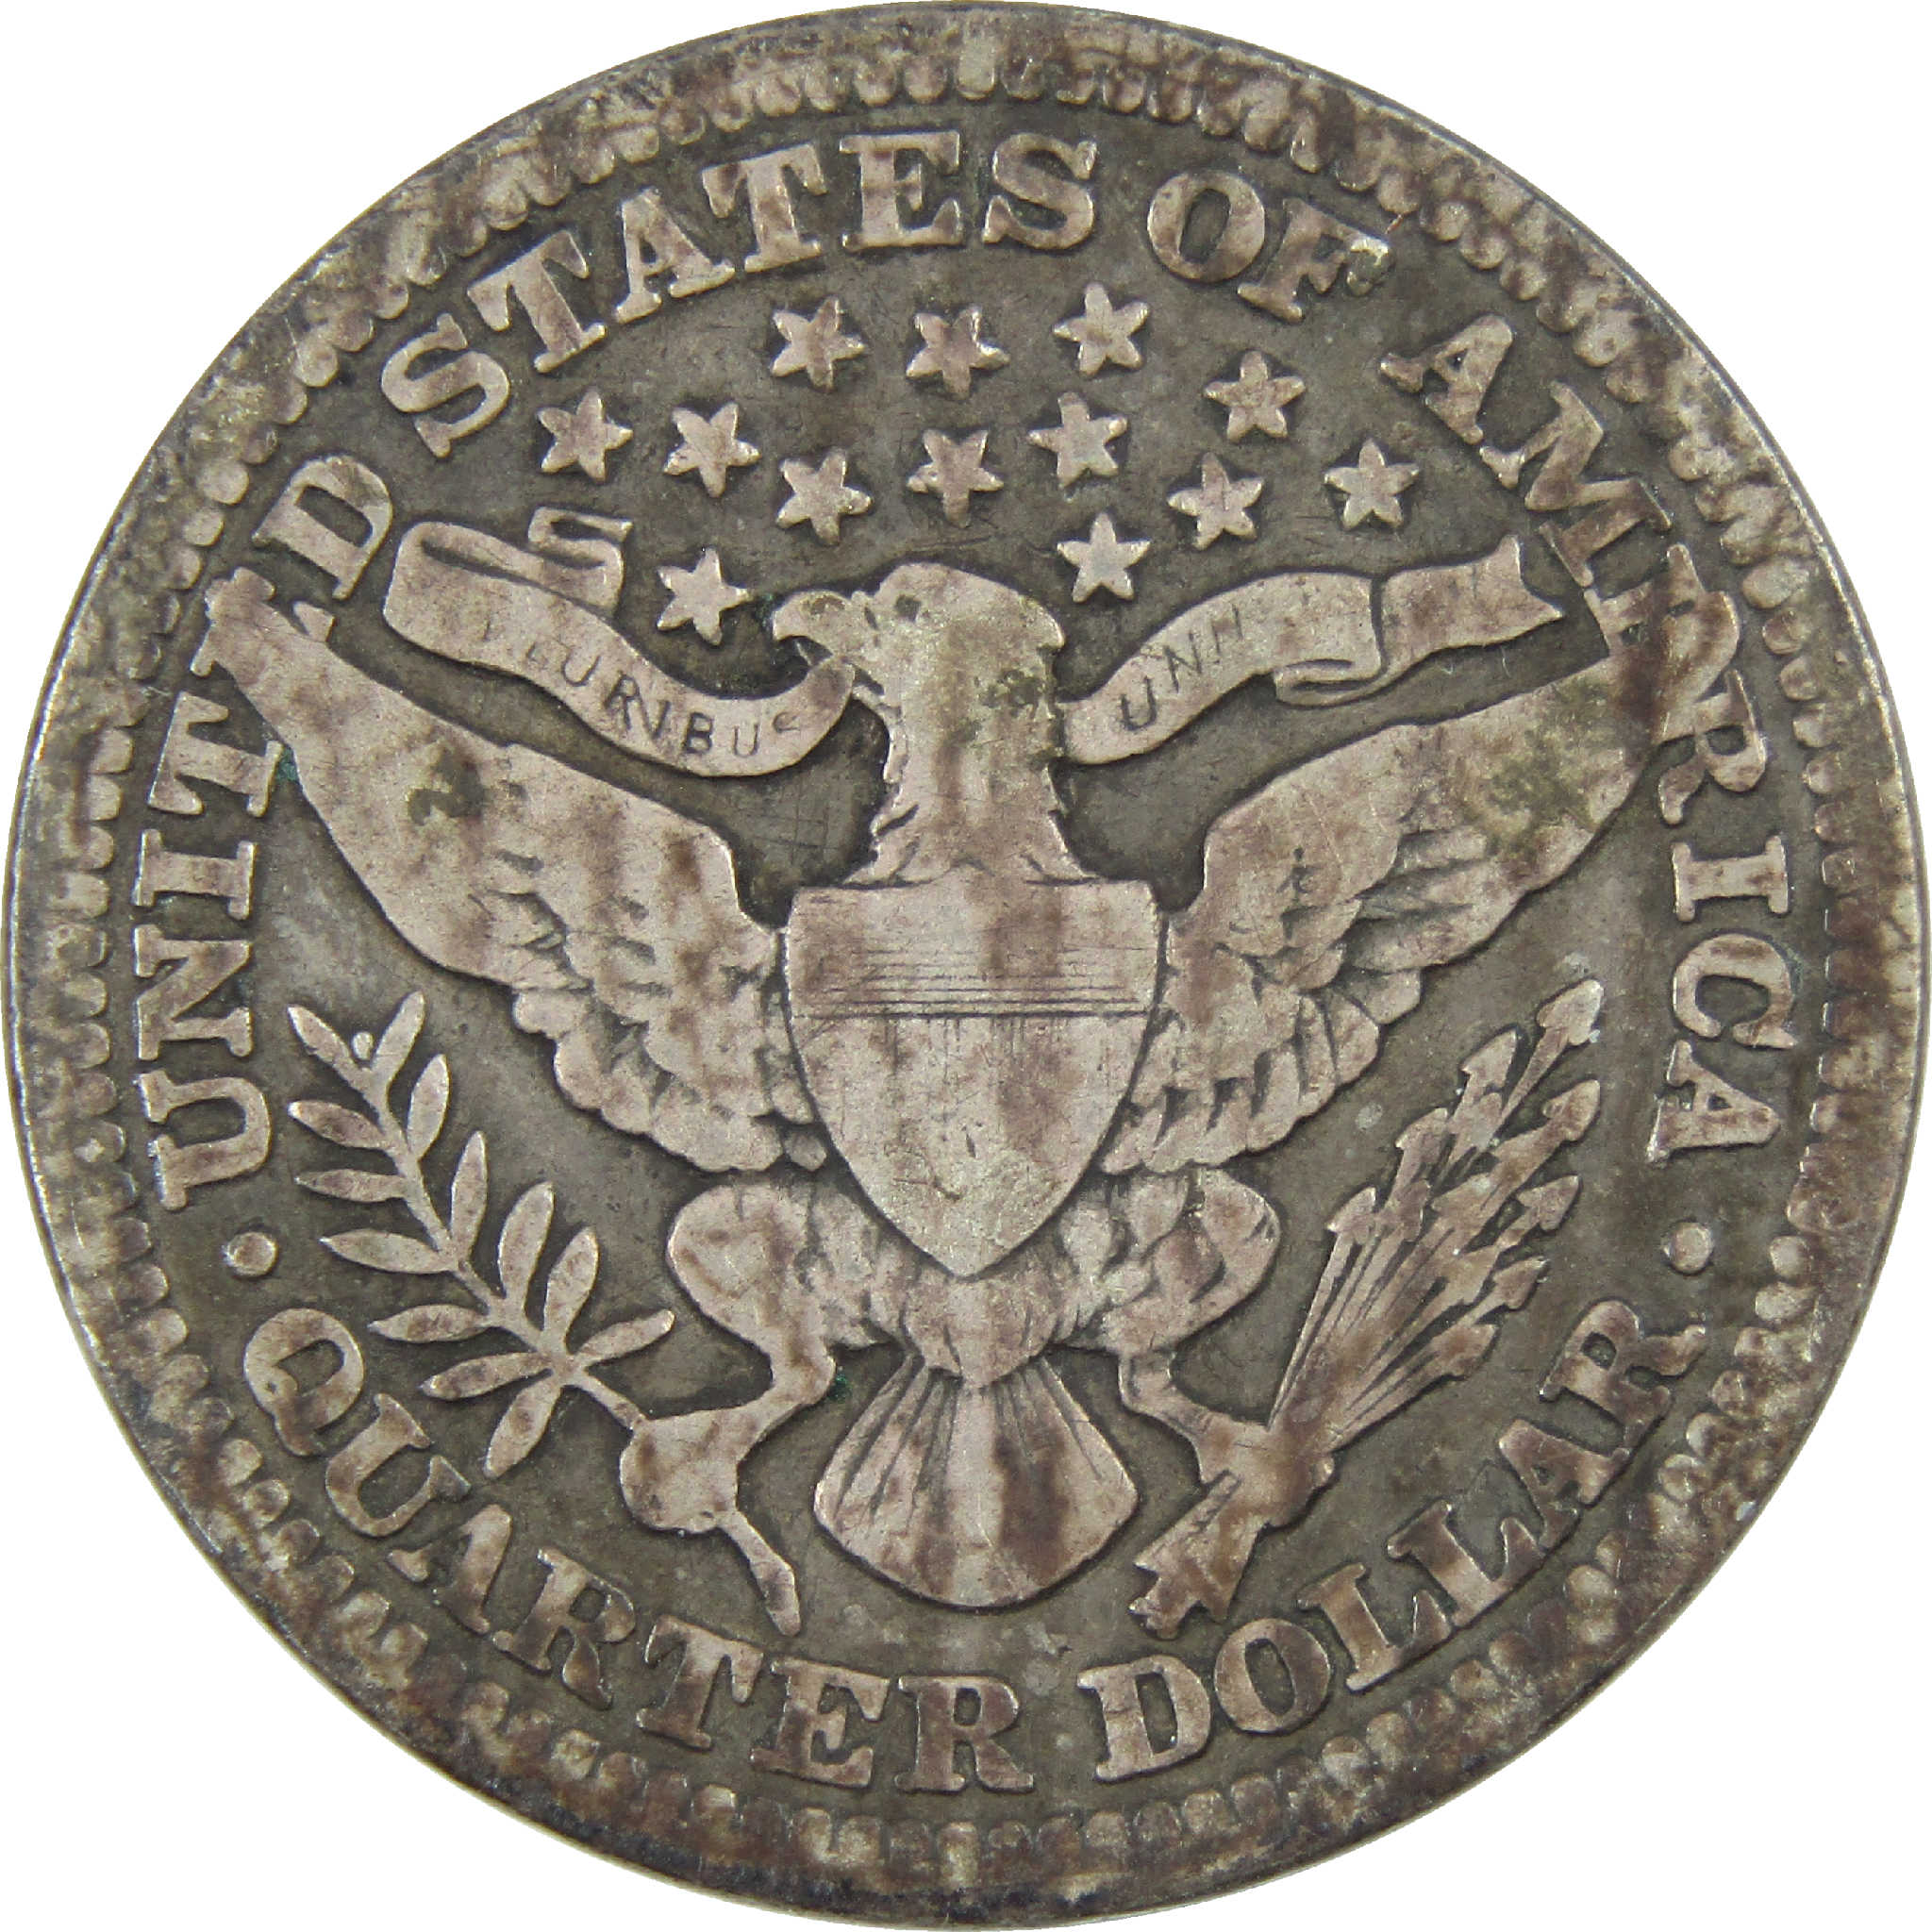 1915 Barber Quarter VG Very Good Silver 25c Coin SKU:I12289